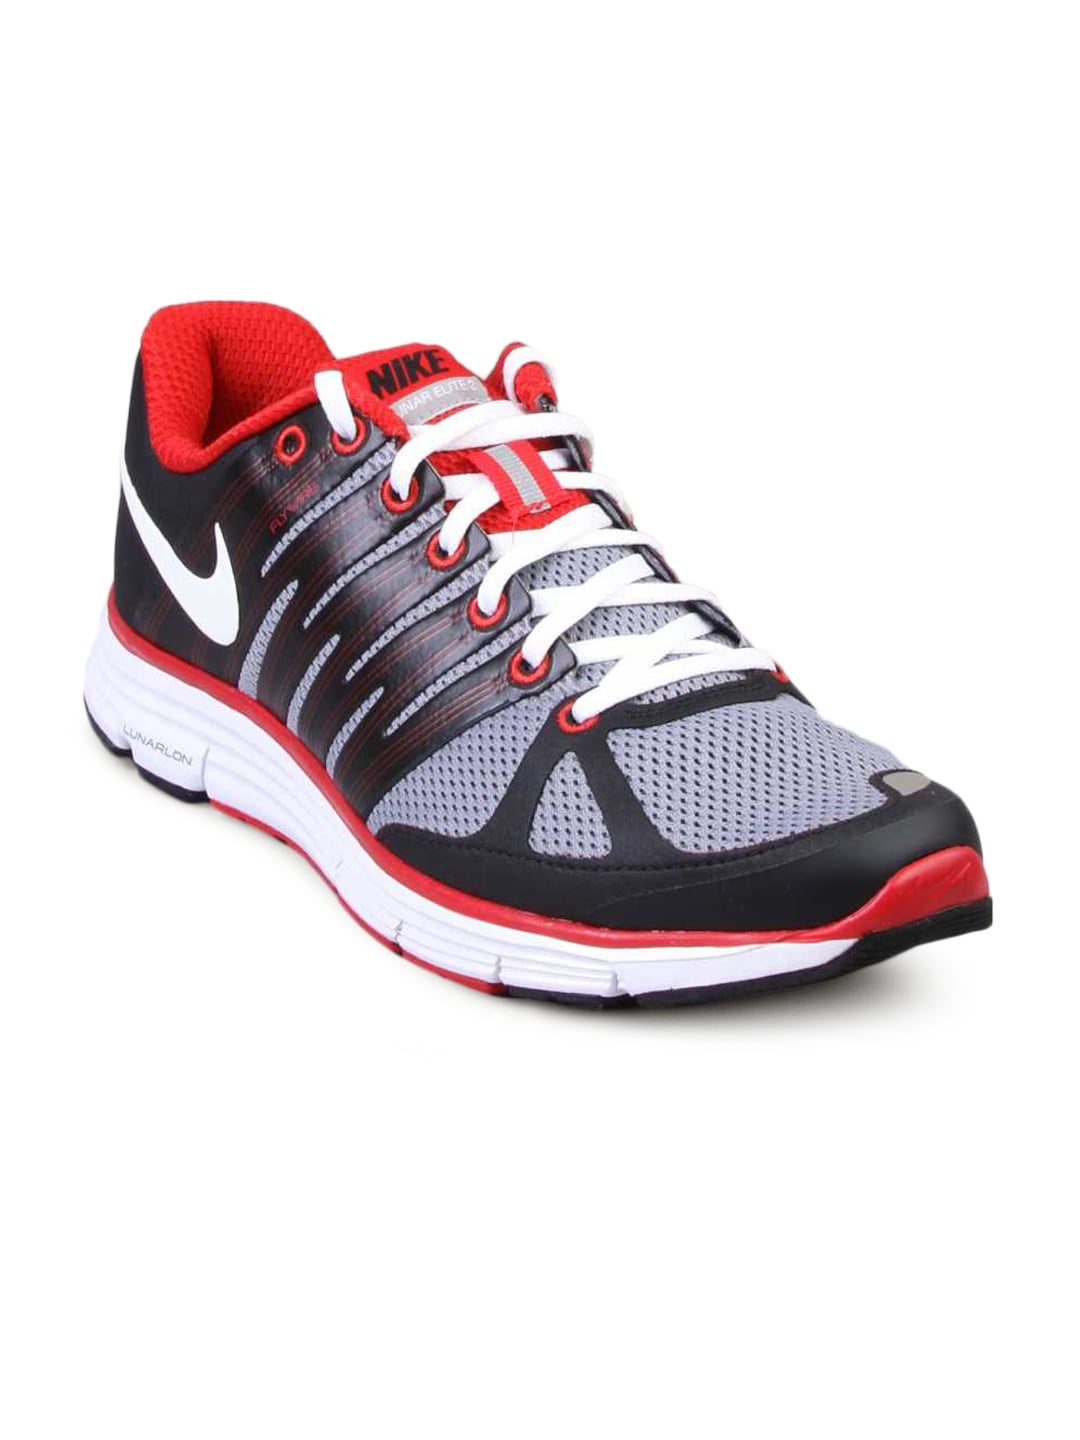 Nike Men's Lunarelite Grey Red Shoe